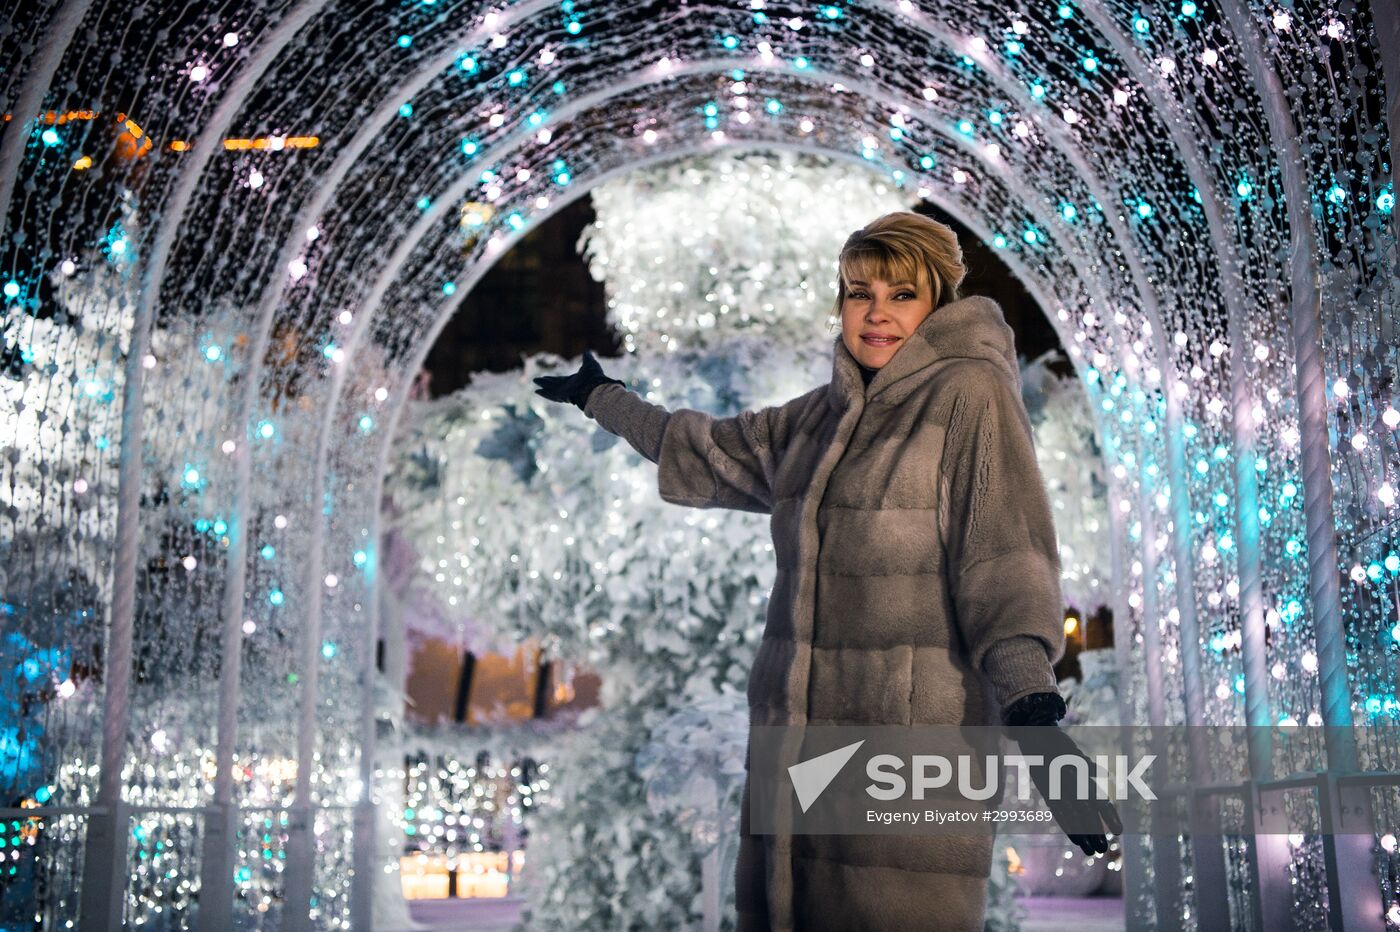 Test run of "Musical Forest" light art installation on Pushkinskaya Square